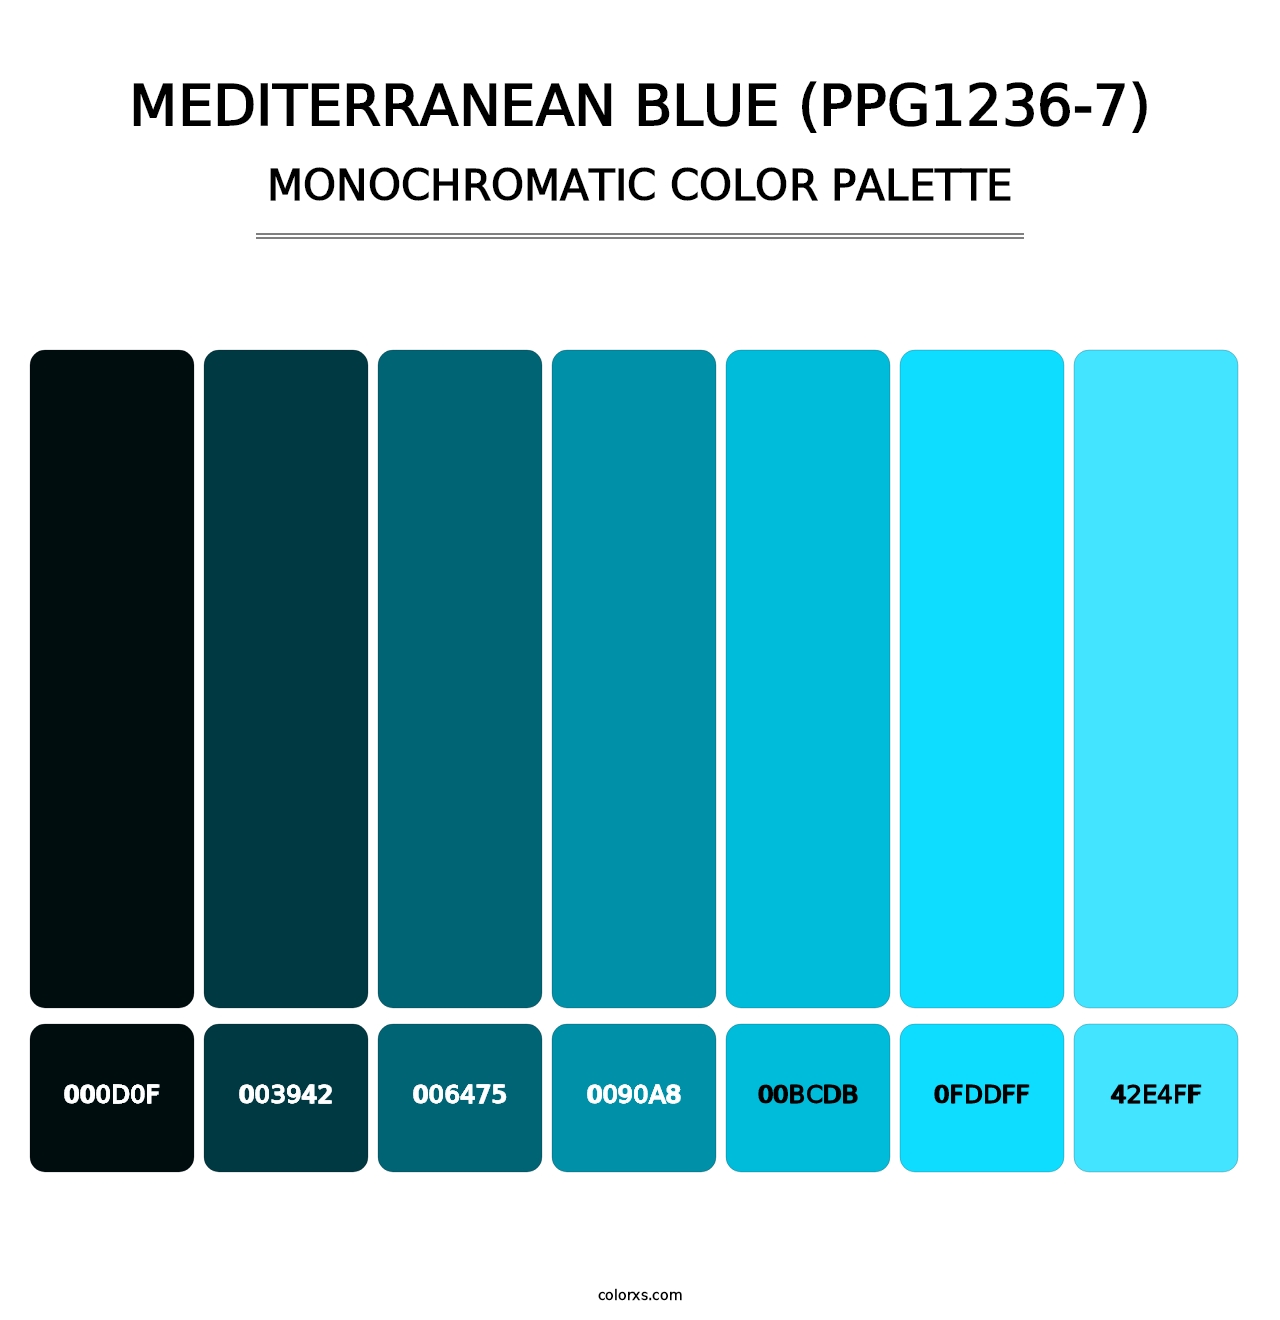 Mediterranean Blue (PPG1236-7) - Monochromatic Color Palette